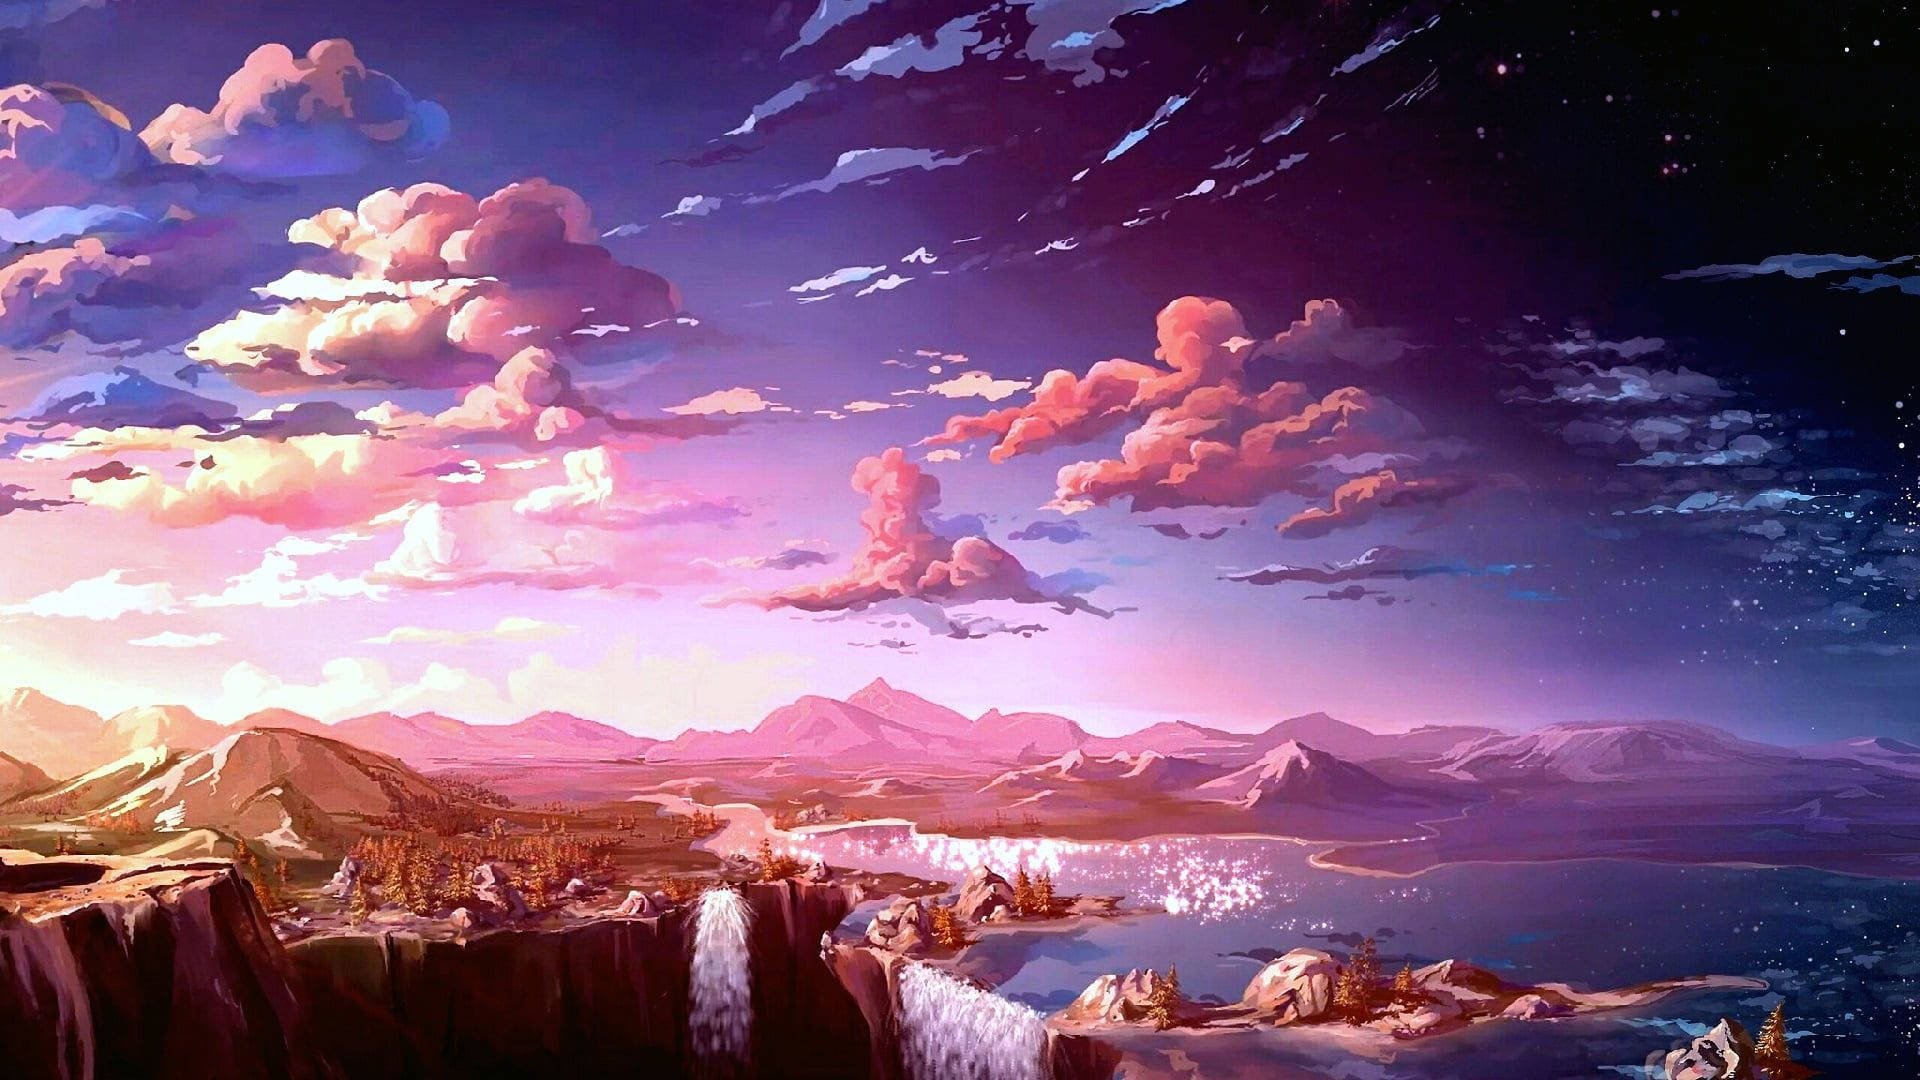 Animated landscape wallpaper